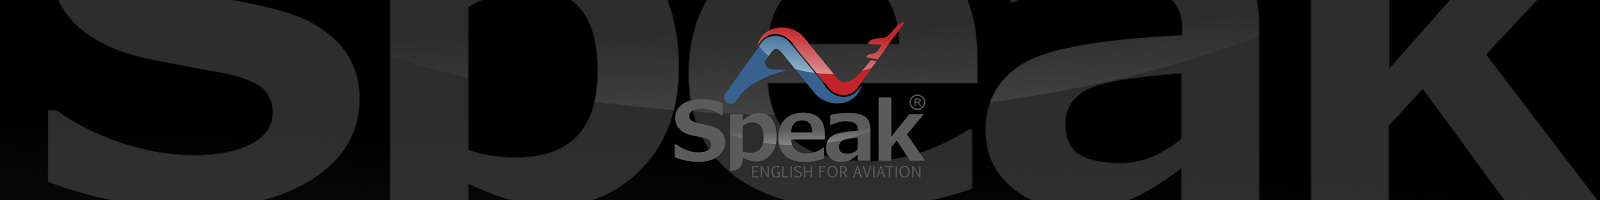 AvSpeak - English for Aviation